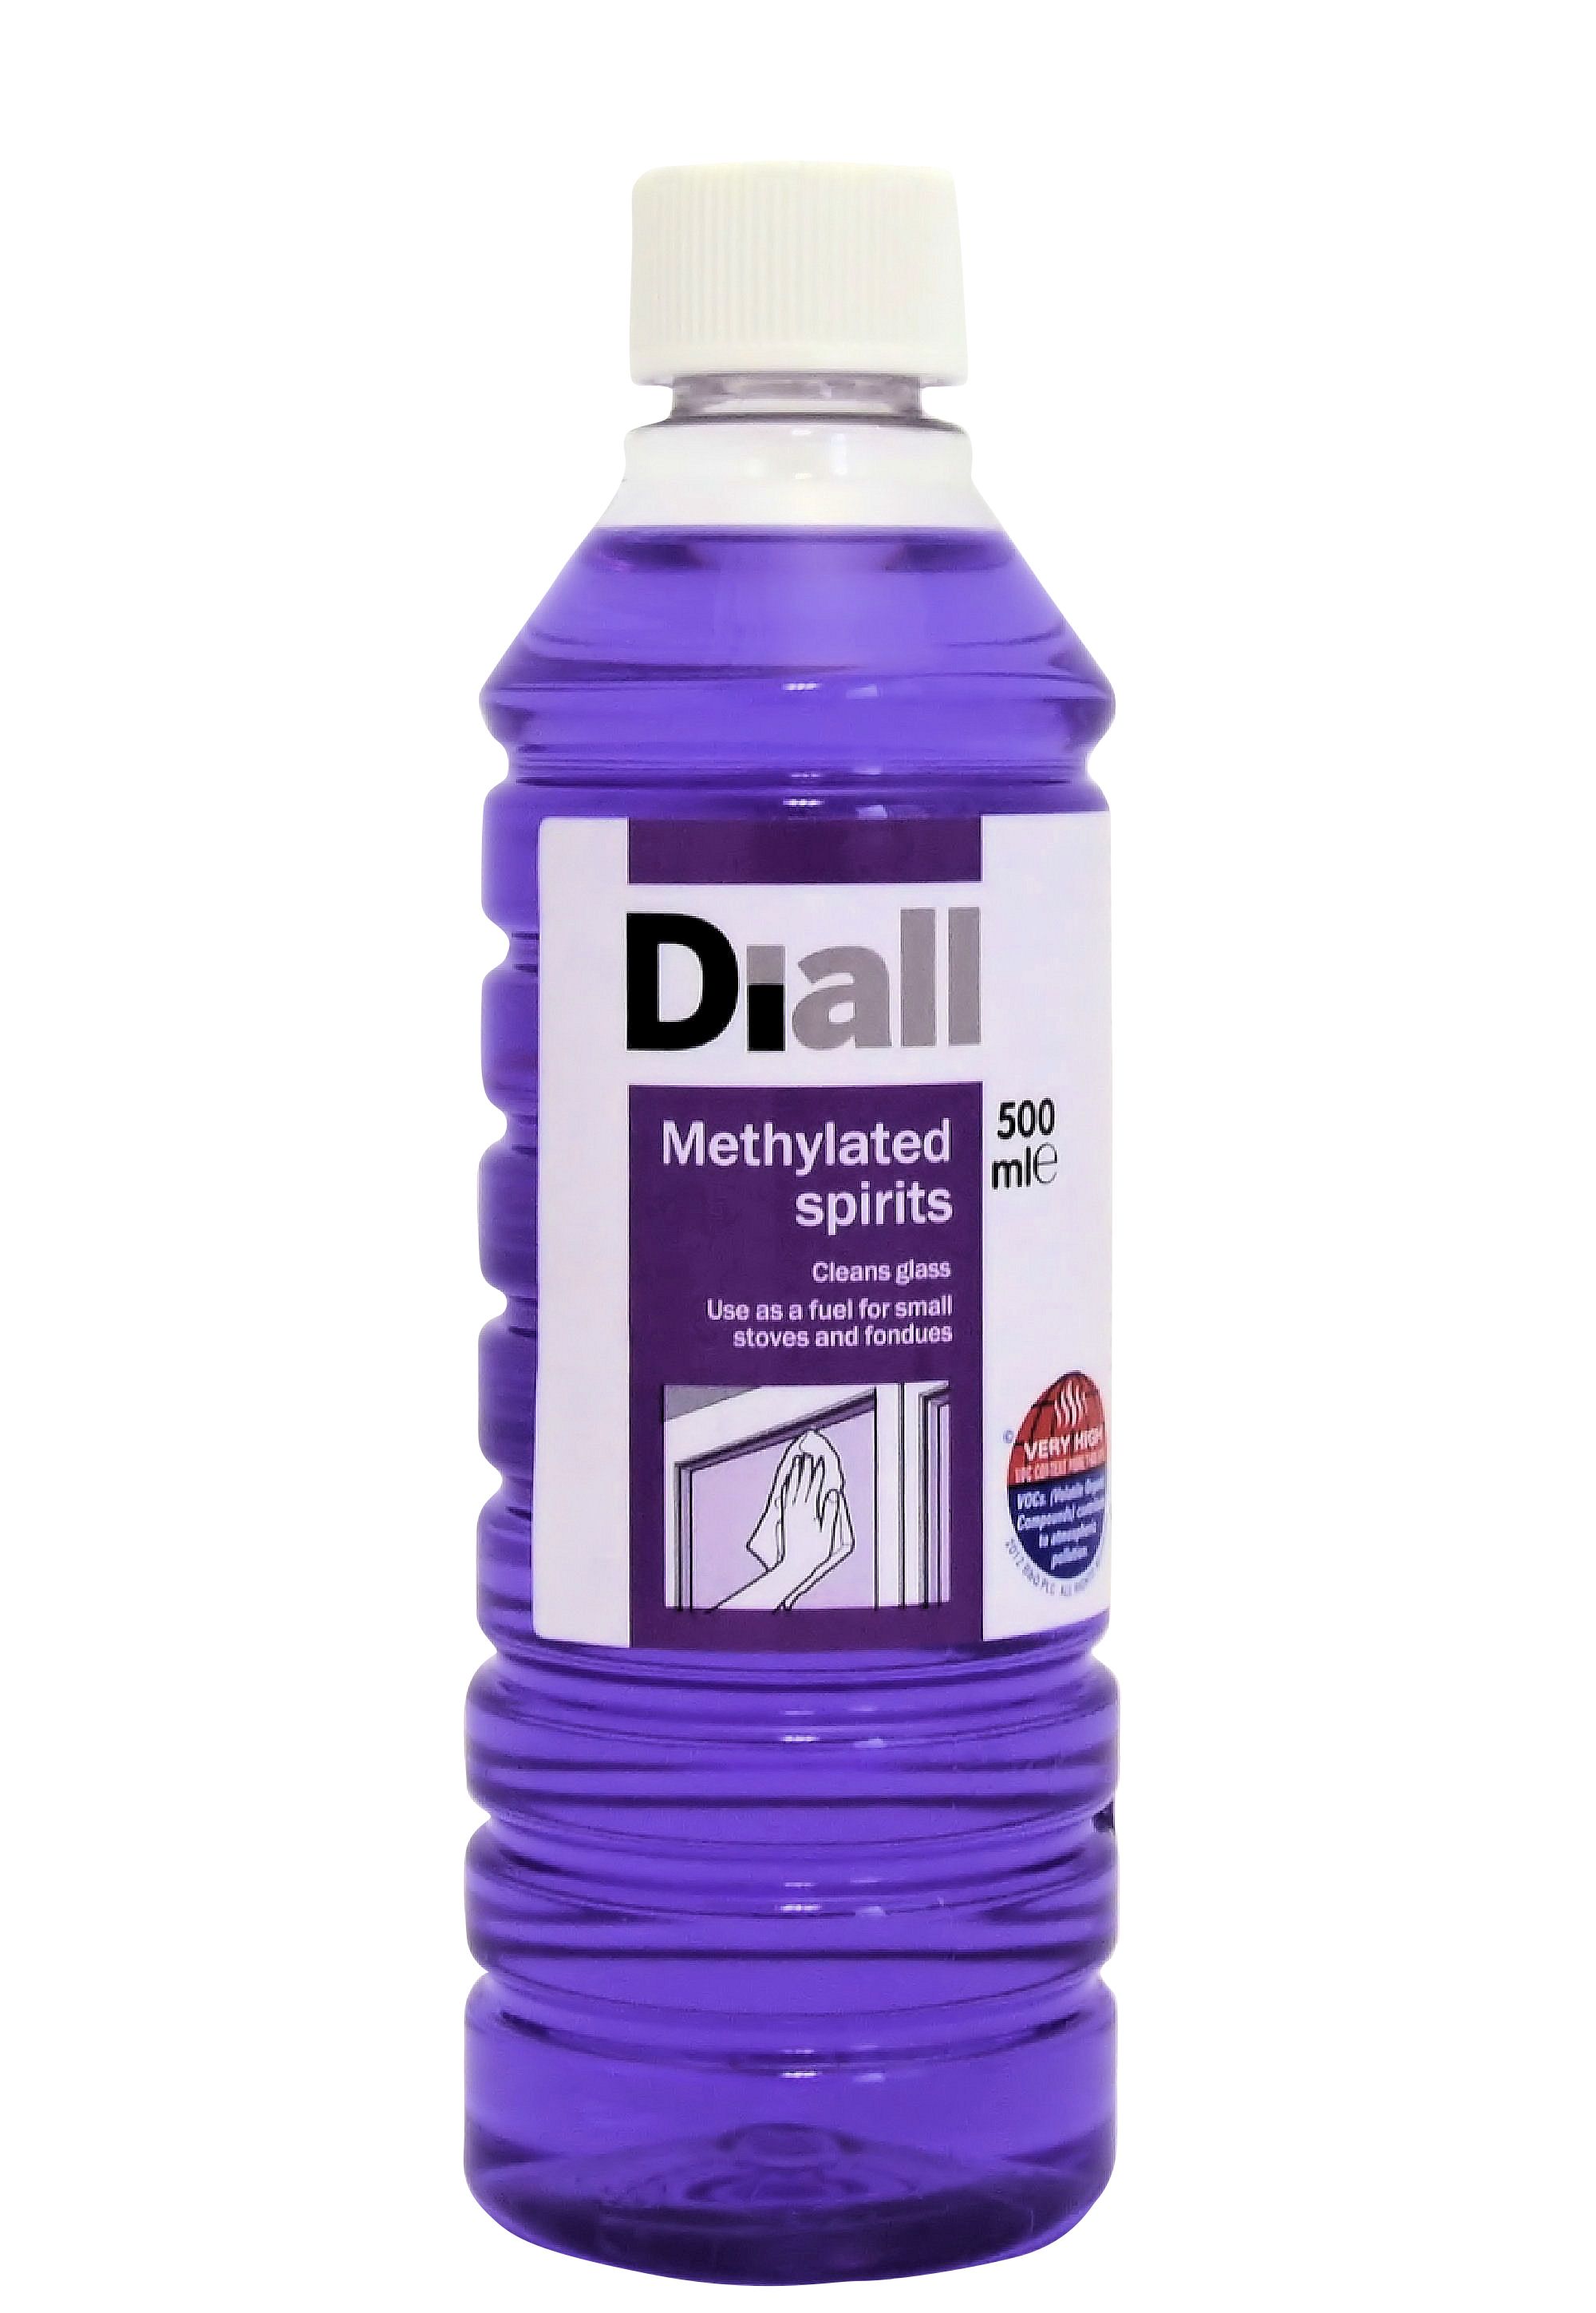 Diall Methylated spirit, 500ml